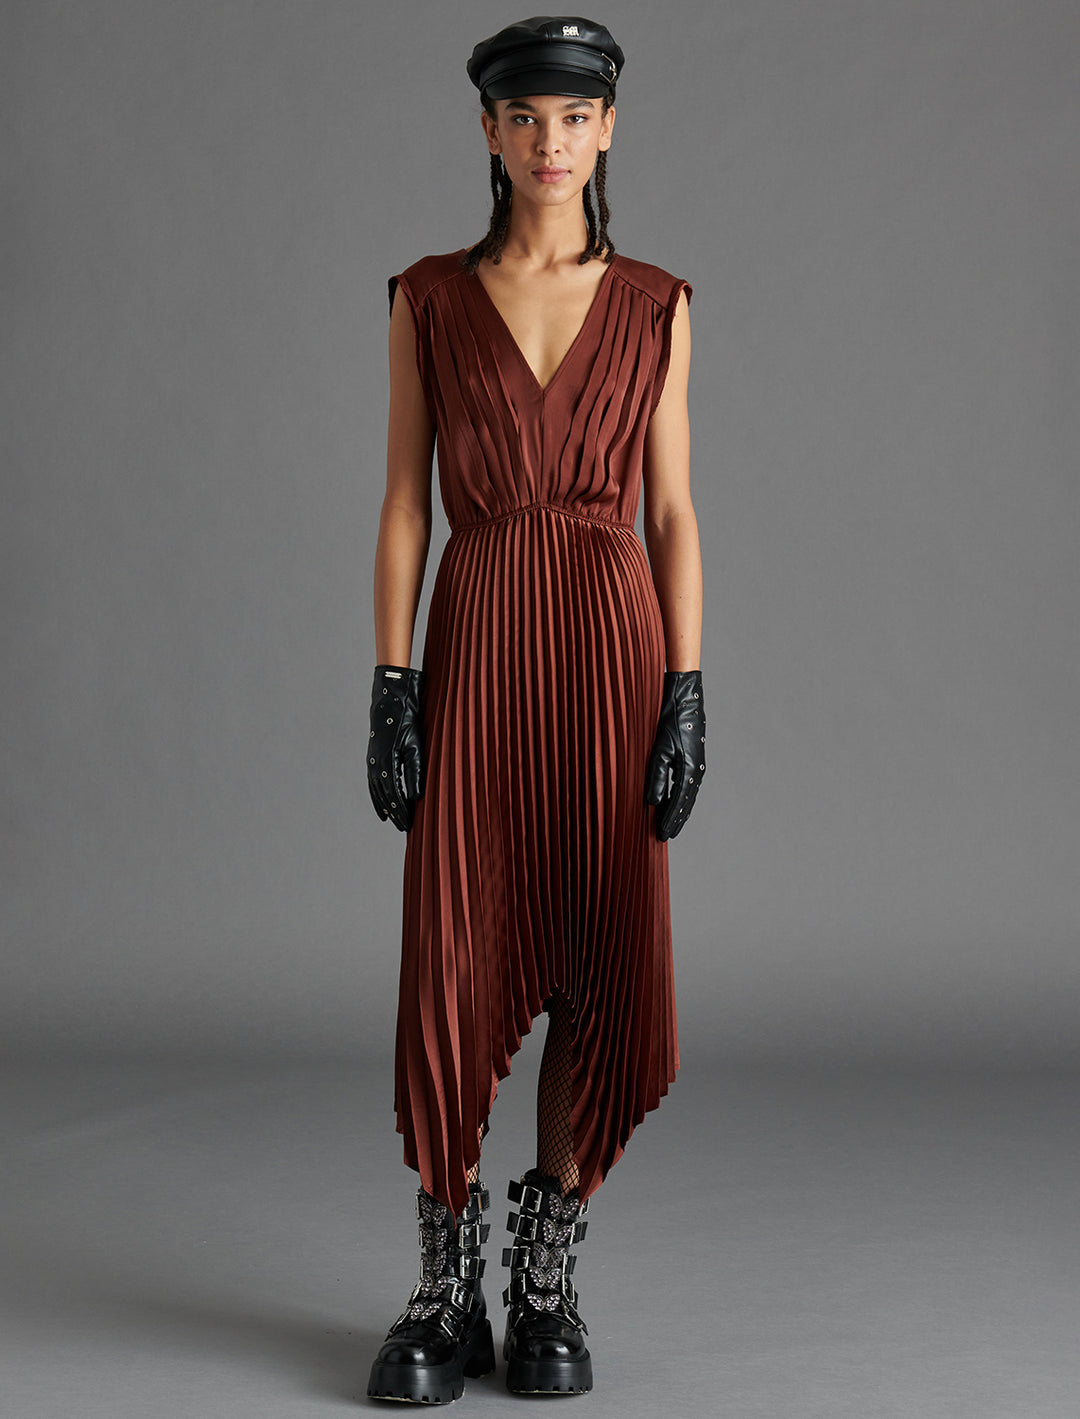 Model wearing Steve Madden's donna dress in cinnamon.